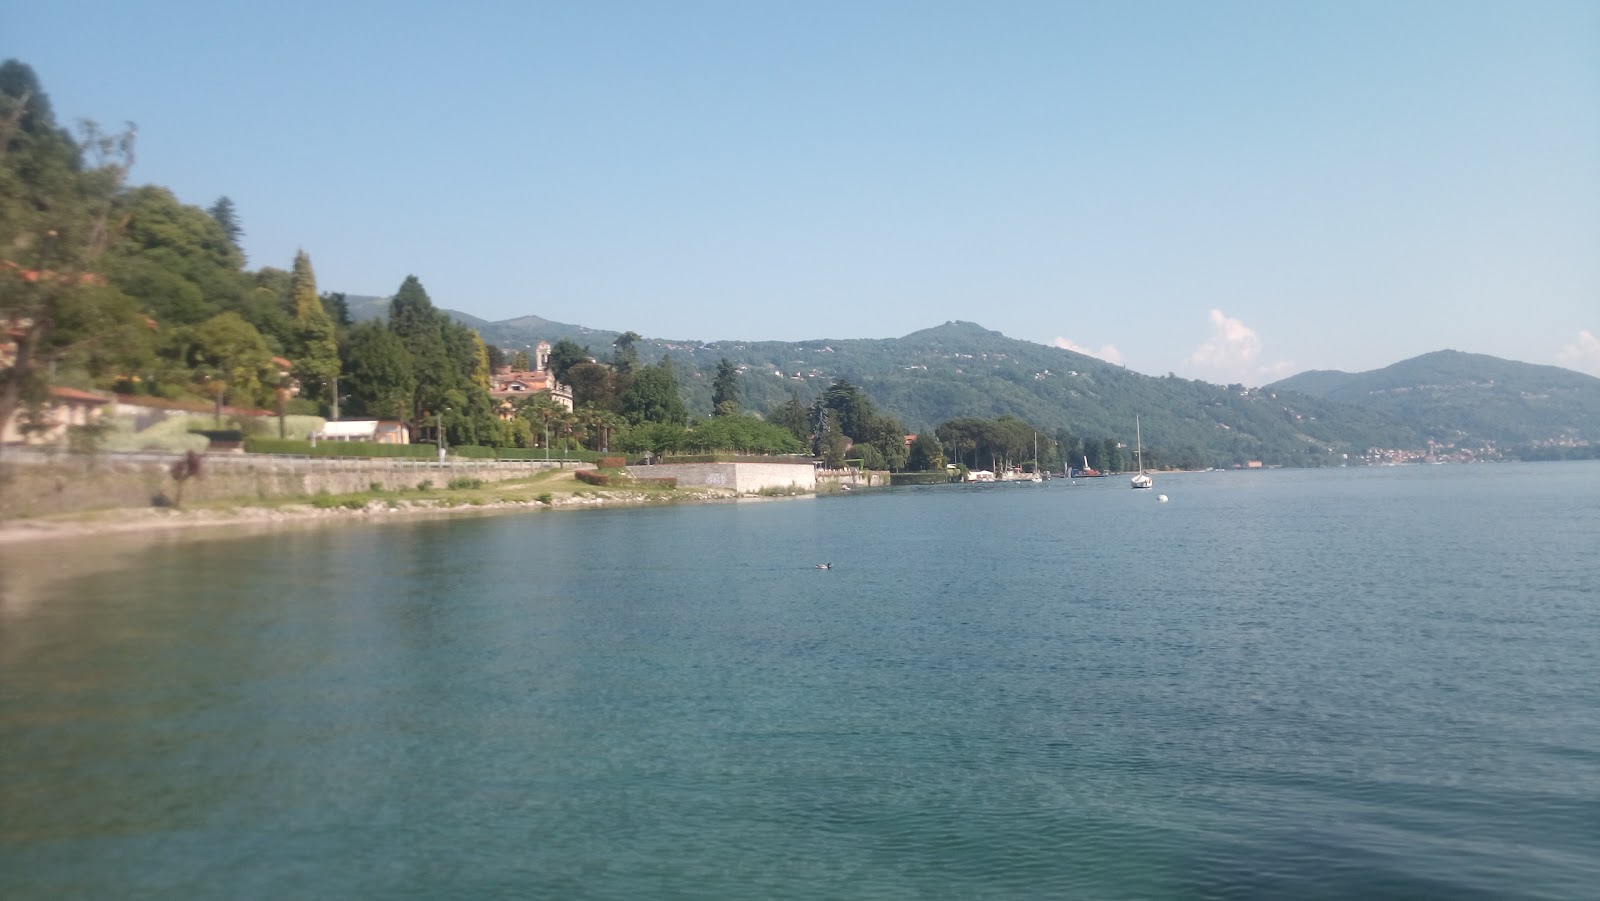 Photo of Spiaggia sul lago Maggiore with turquoise pure water surface